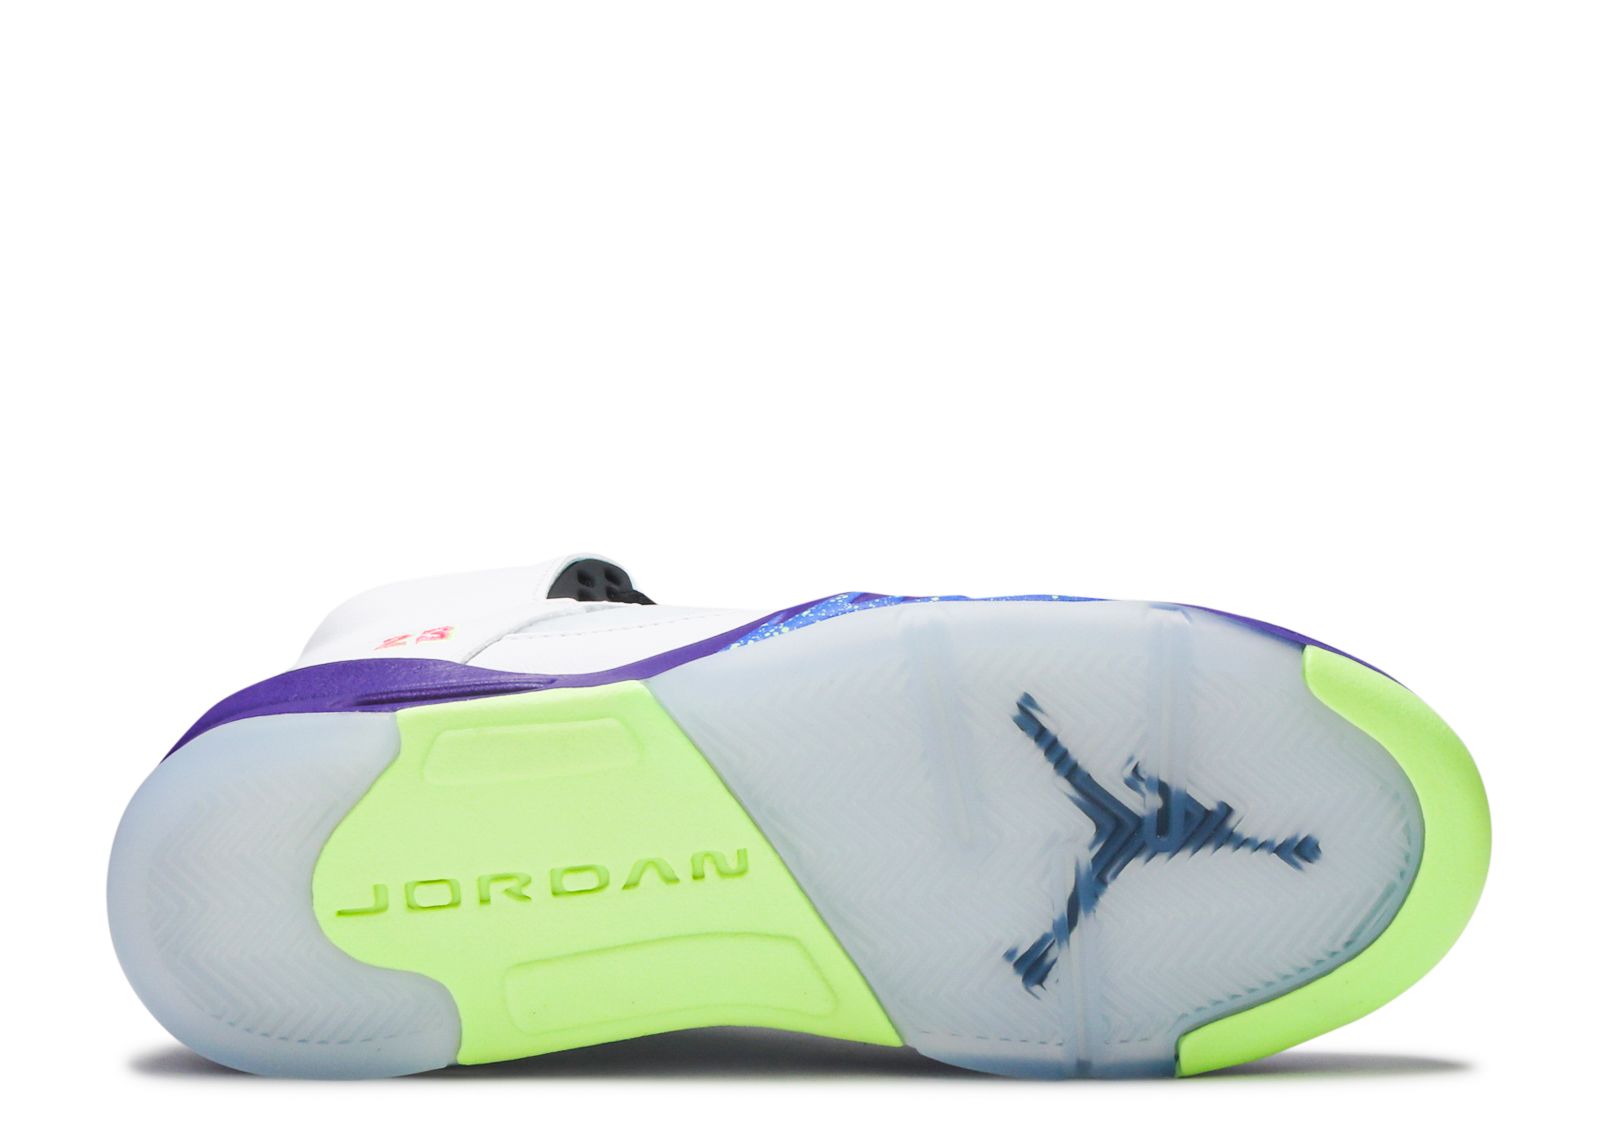  Nike Kid's Shoes Air Jordan 5 Retro (GS) Alternate Bel Air  DB3024-100 (Numeric_3_Point_5)